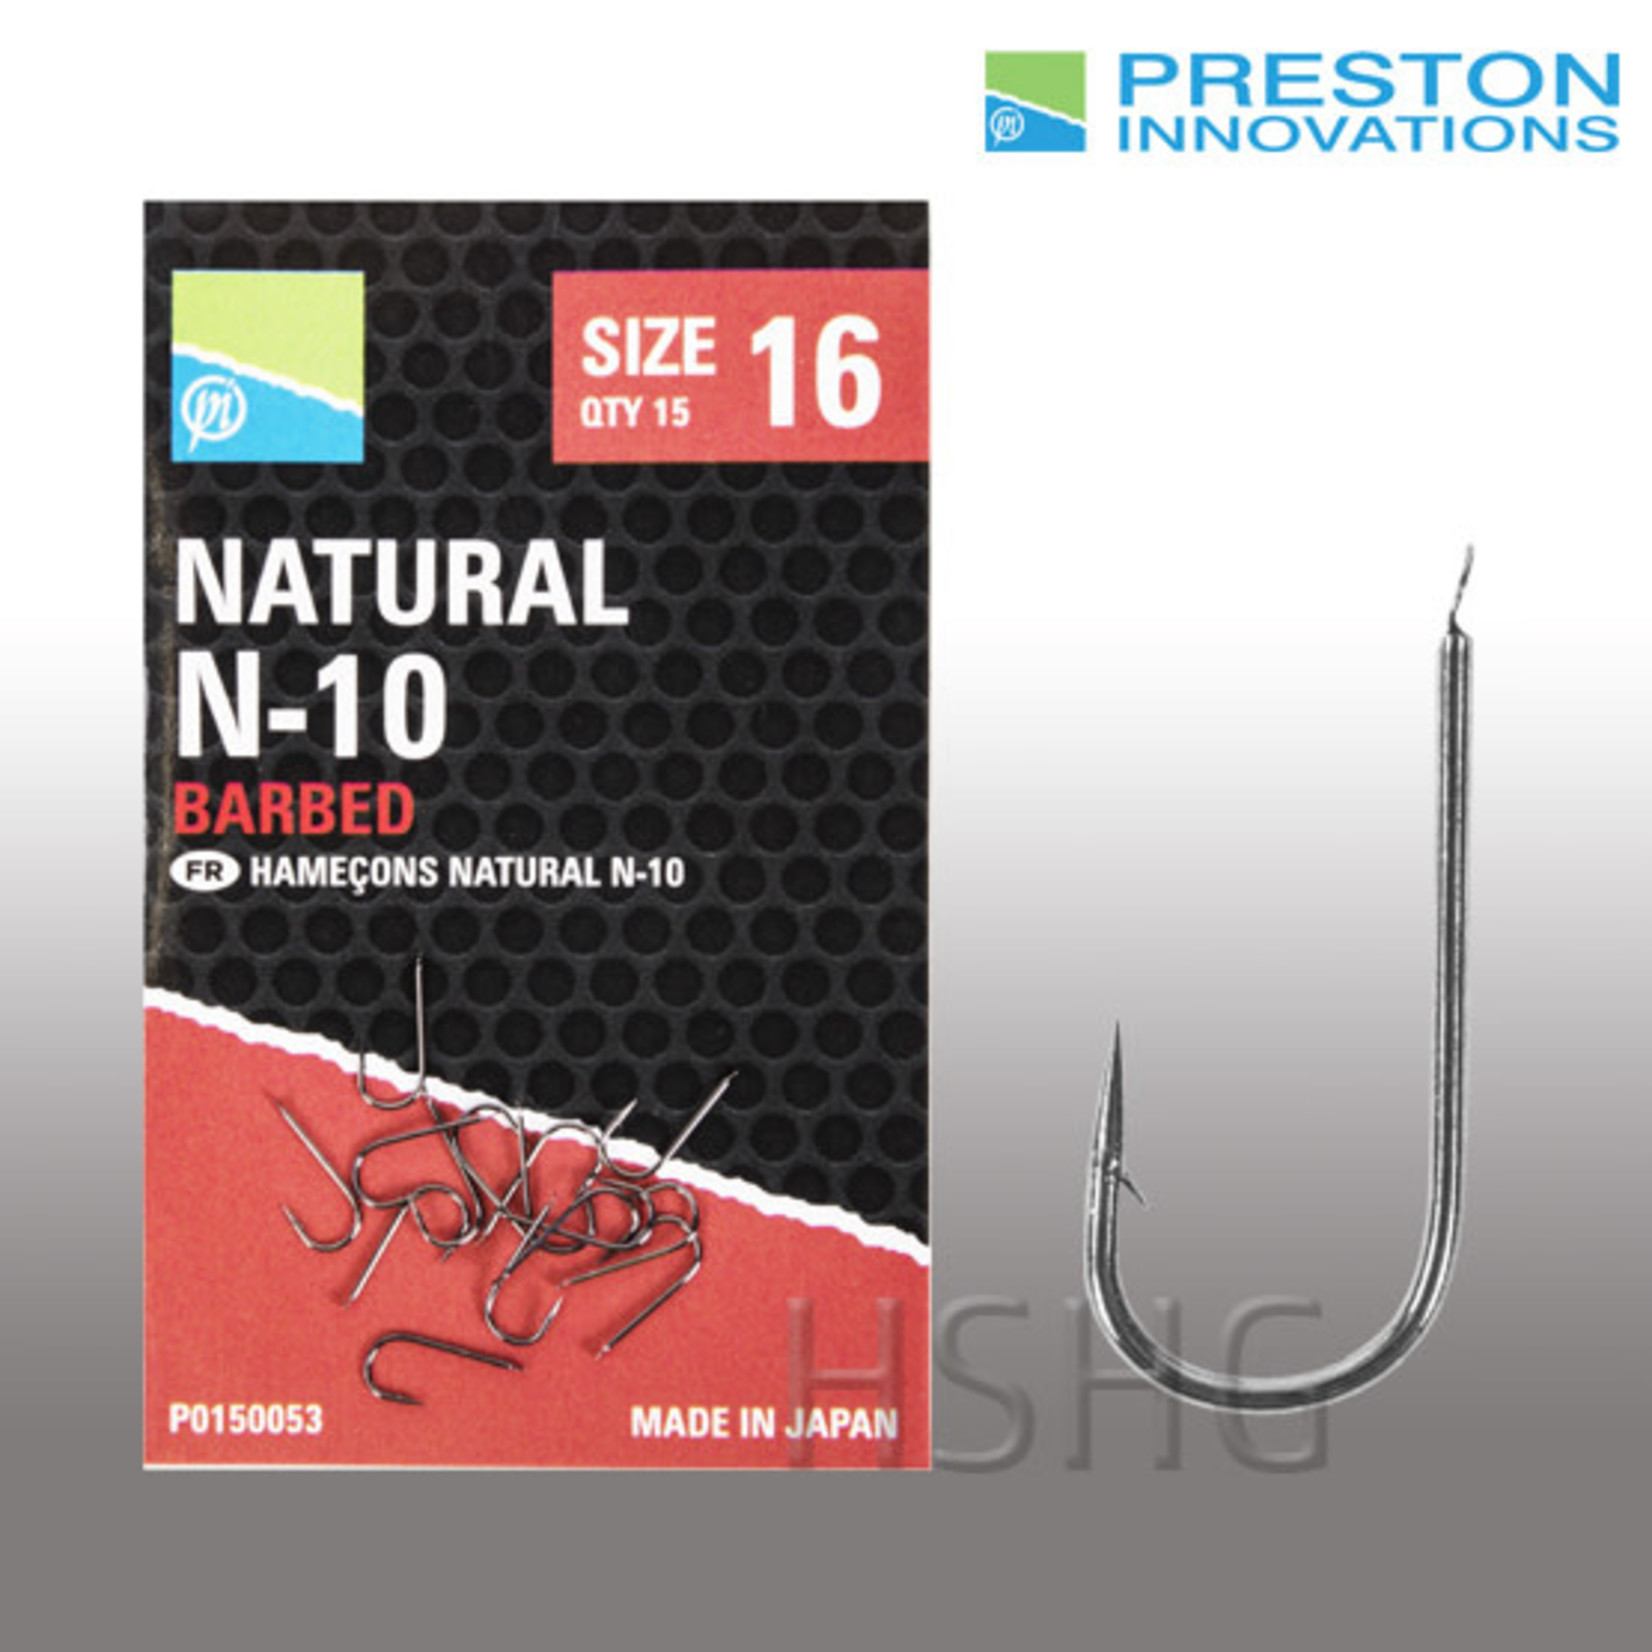 Preston innovations Preston Natural N-10 Vishaak